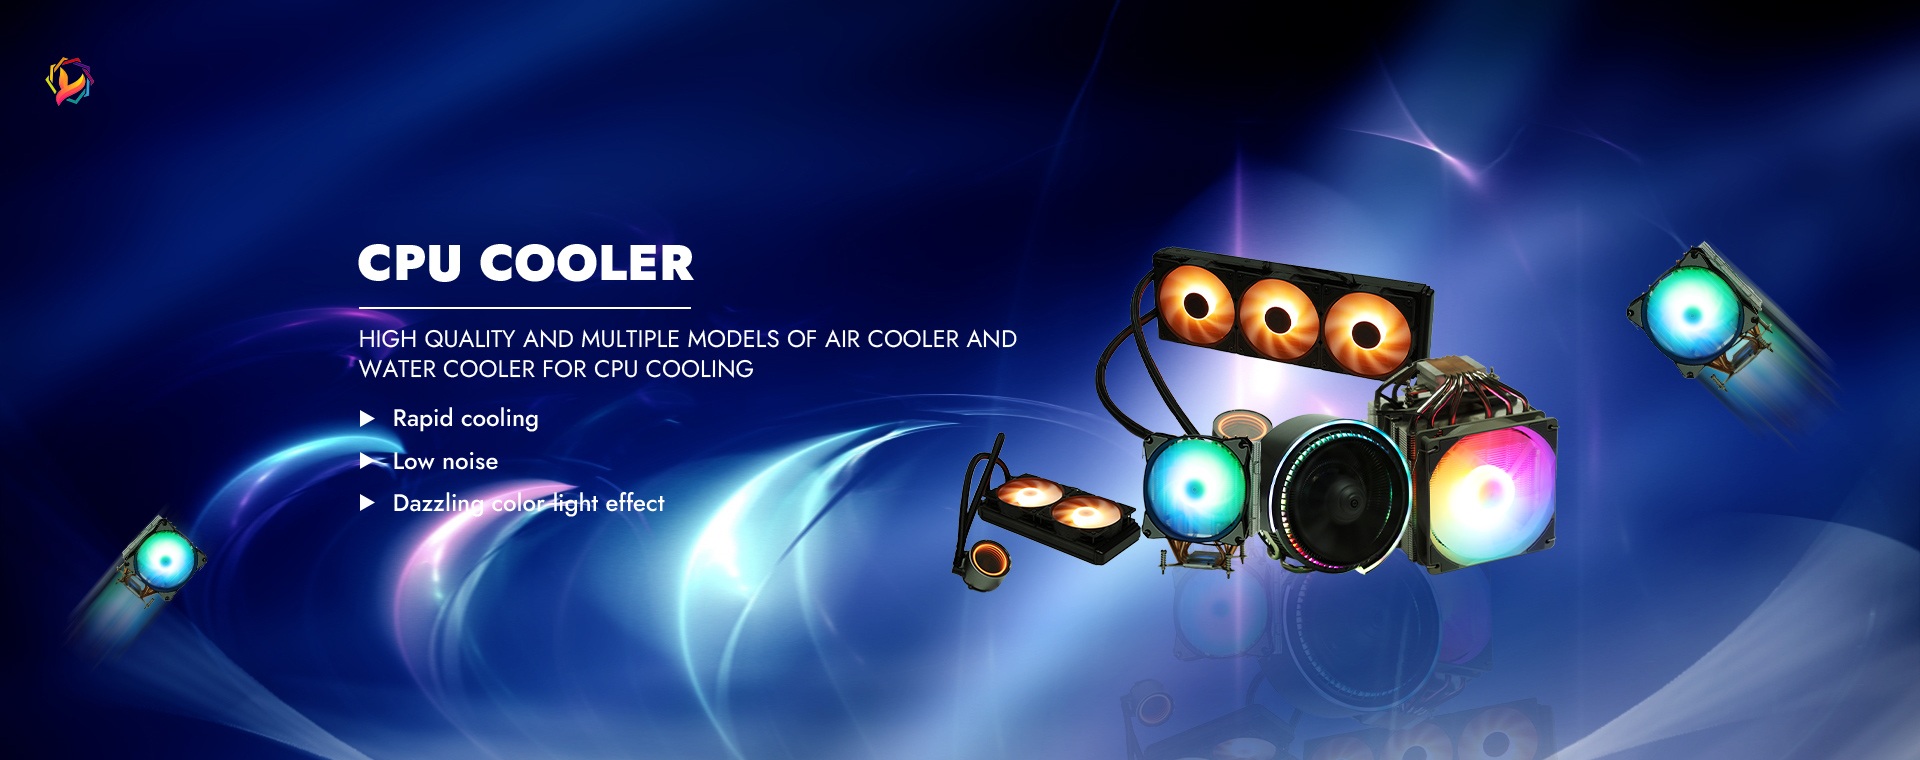 banner-cpu cooler